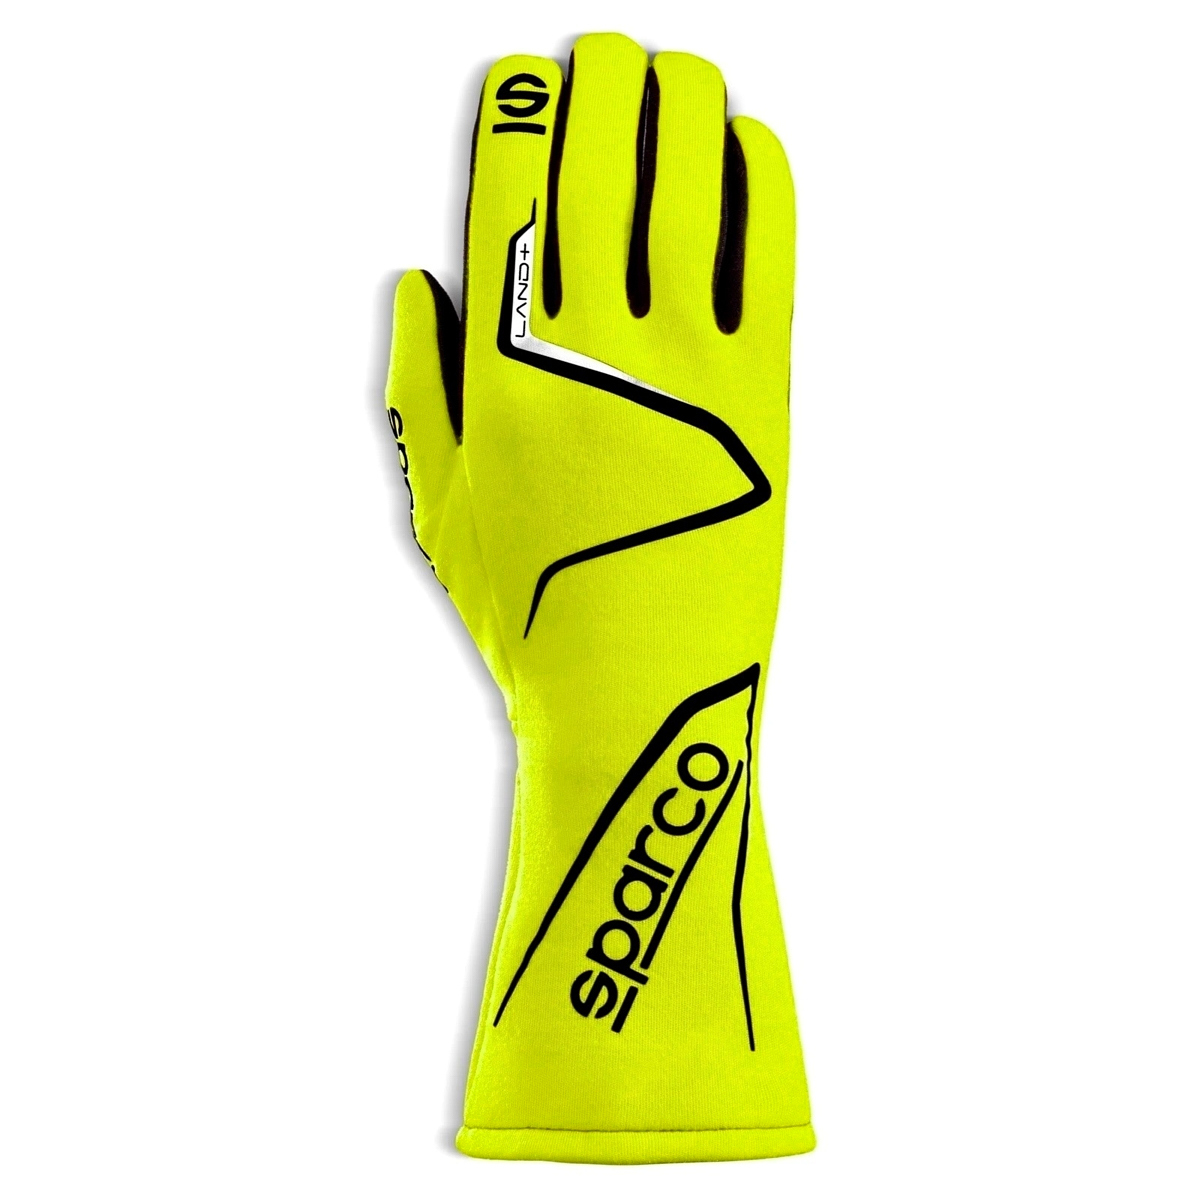 Sparco 00136310GF Driving Gloves, Land, SFI 3.3/5, FIA Approved, Single Layer, Fire Retardant Fabric, Yellow, Medium, Pair